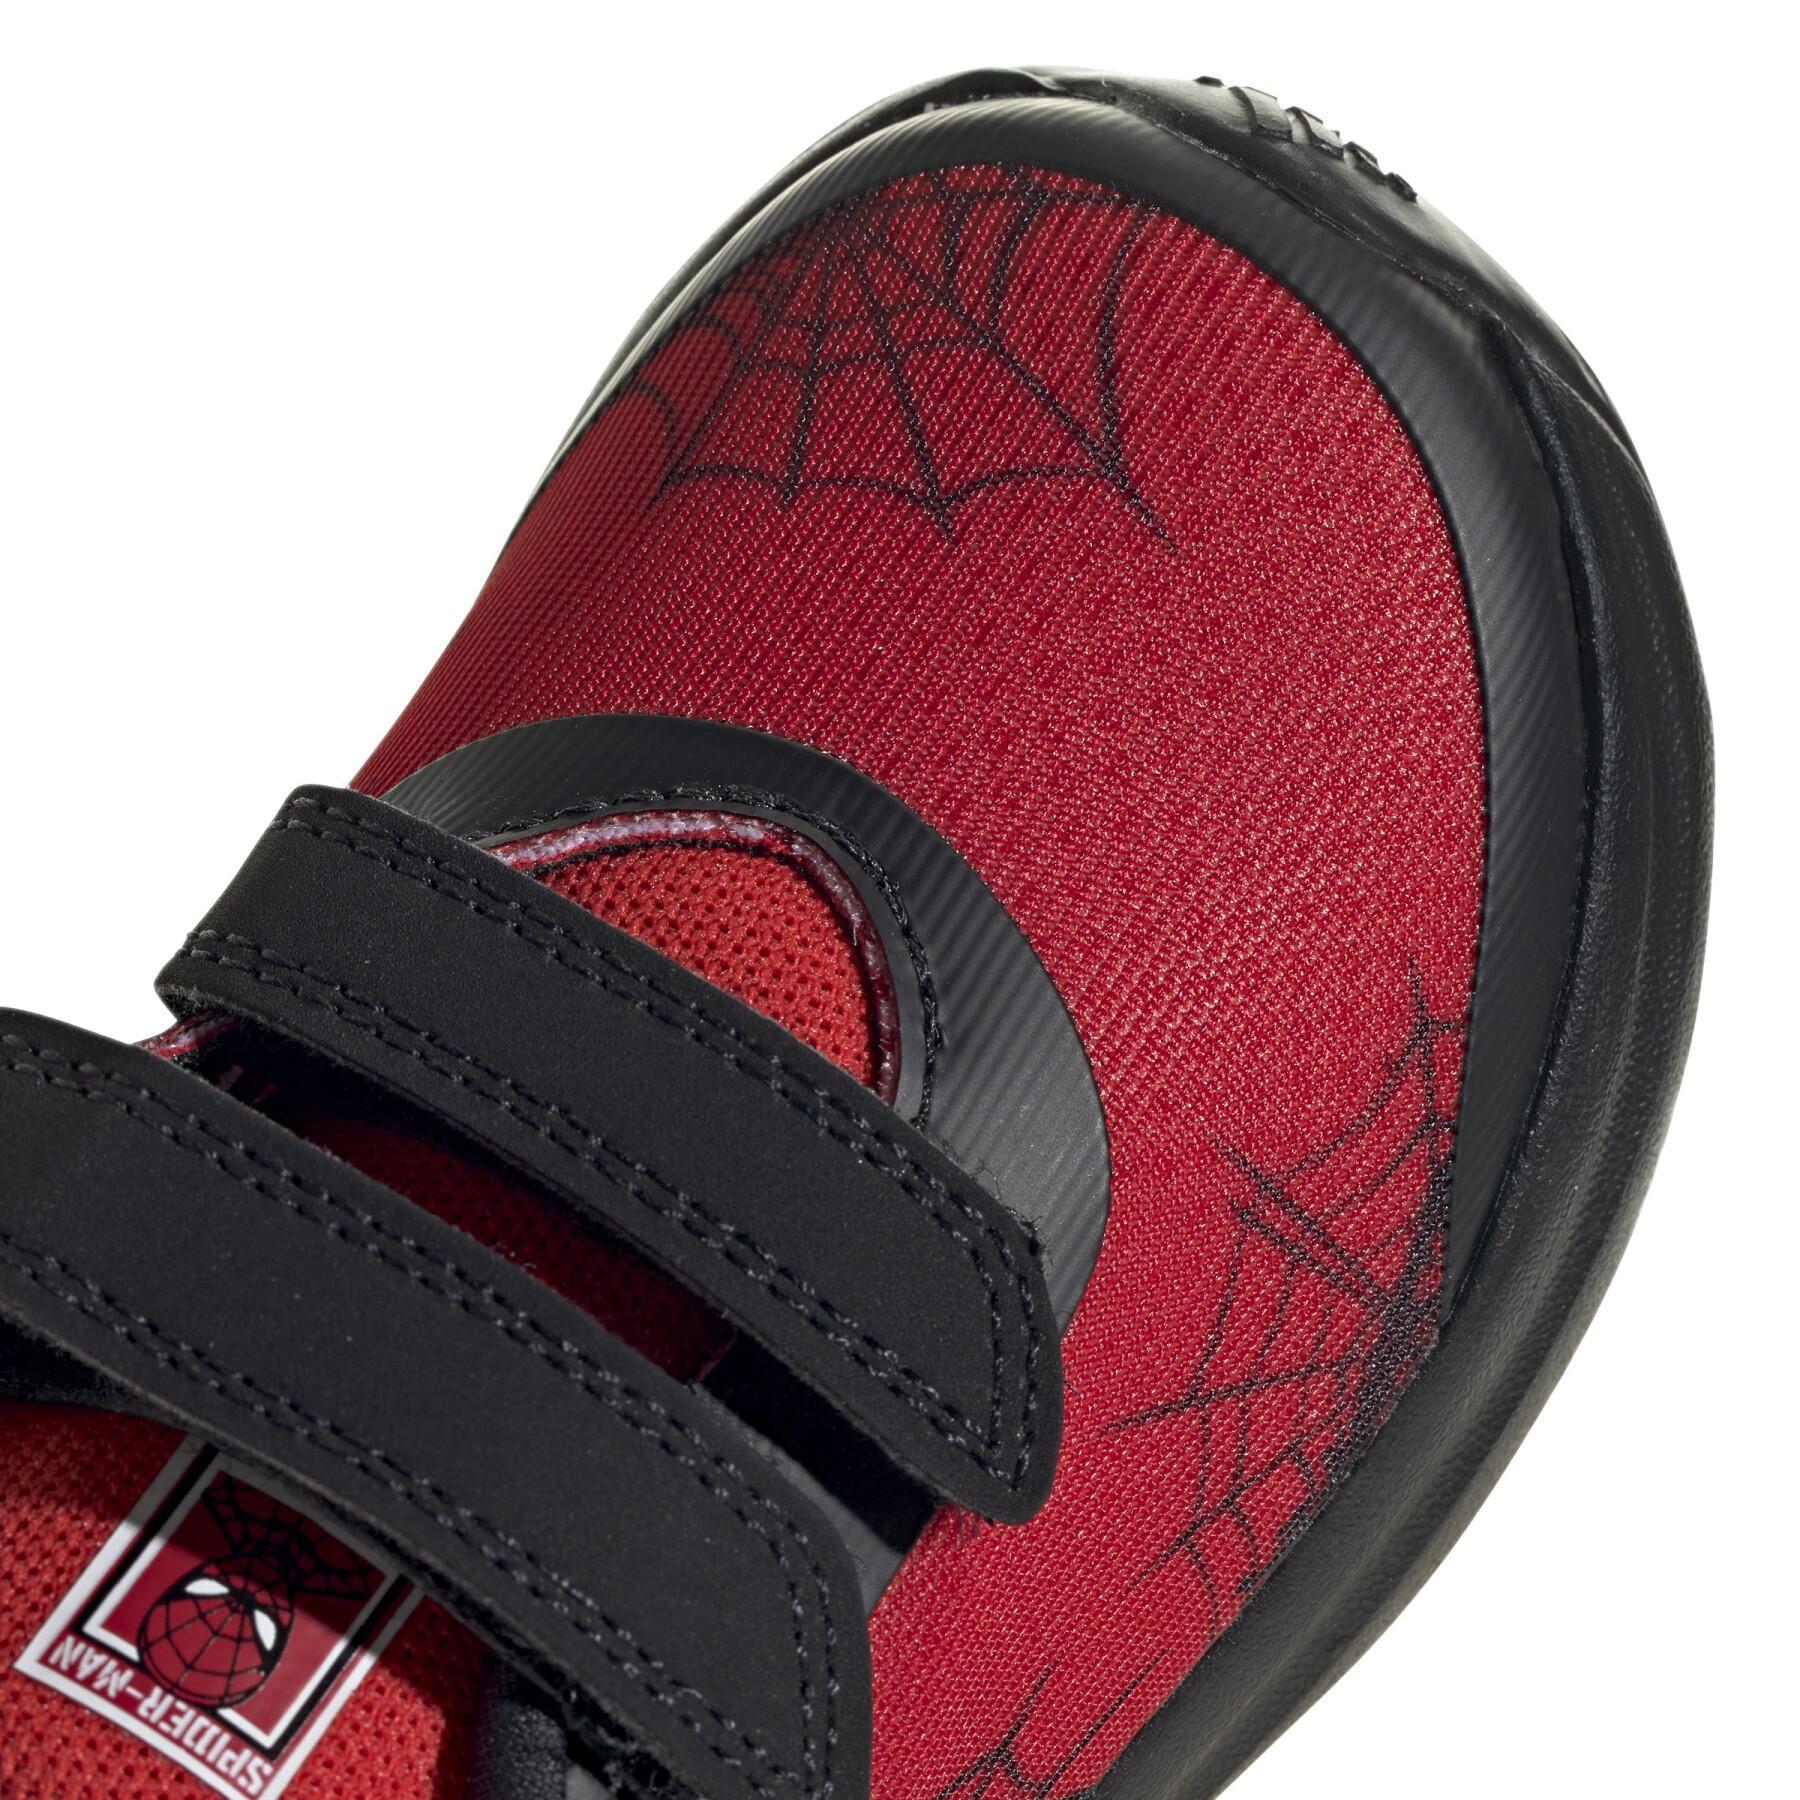 Baskets enfant adidas x Marvel Spider-Man Fortarun